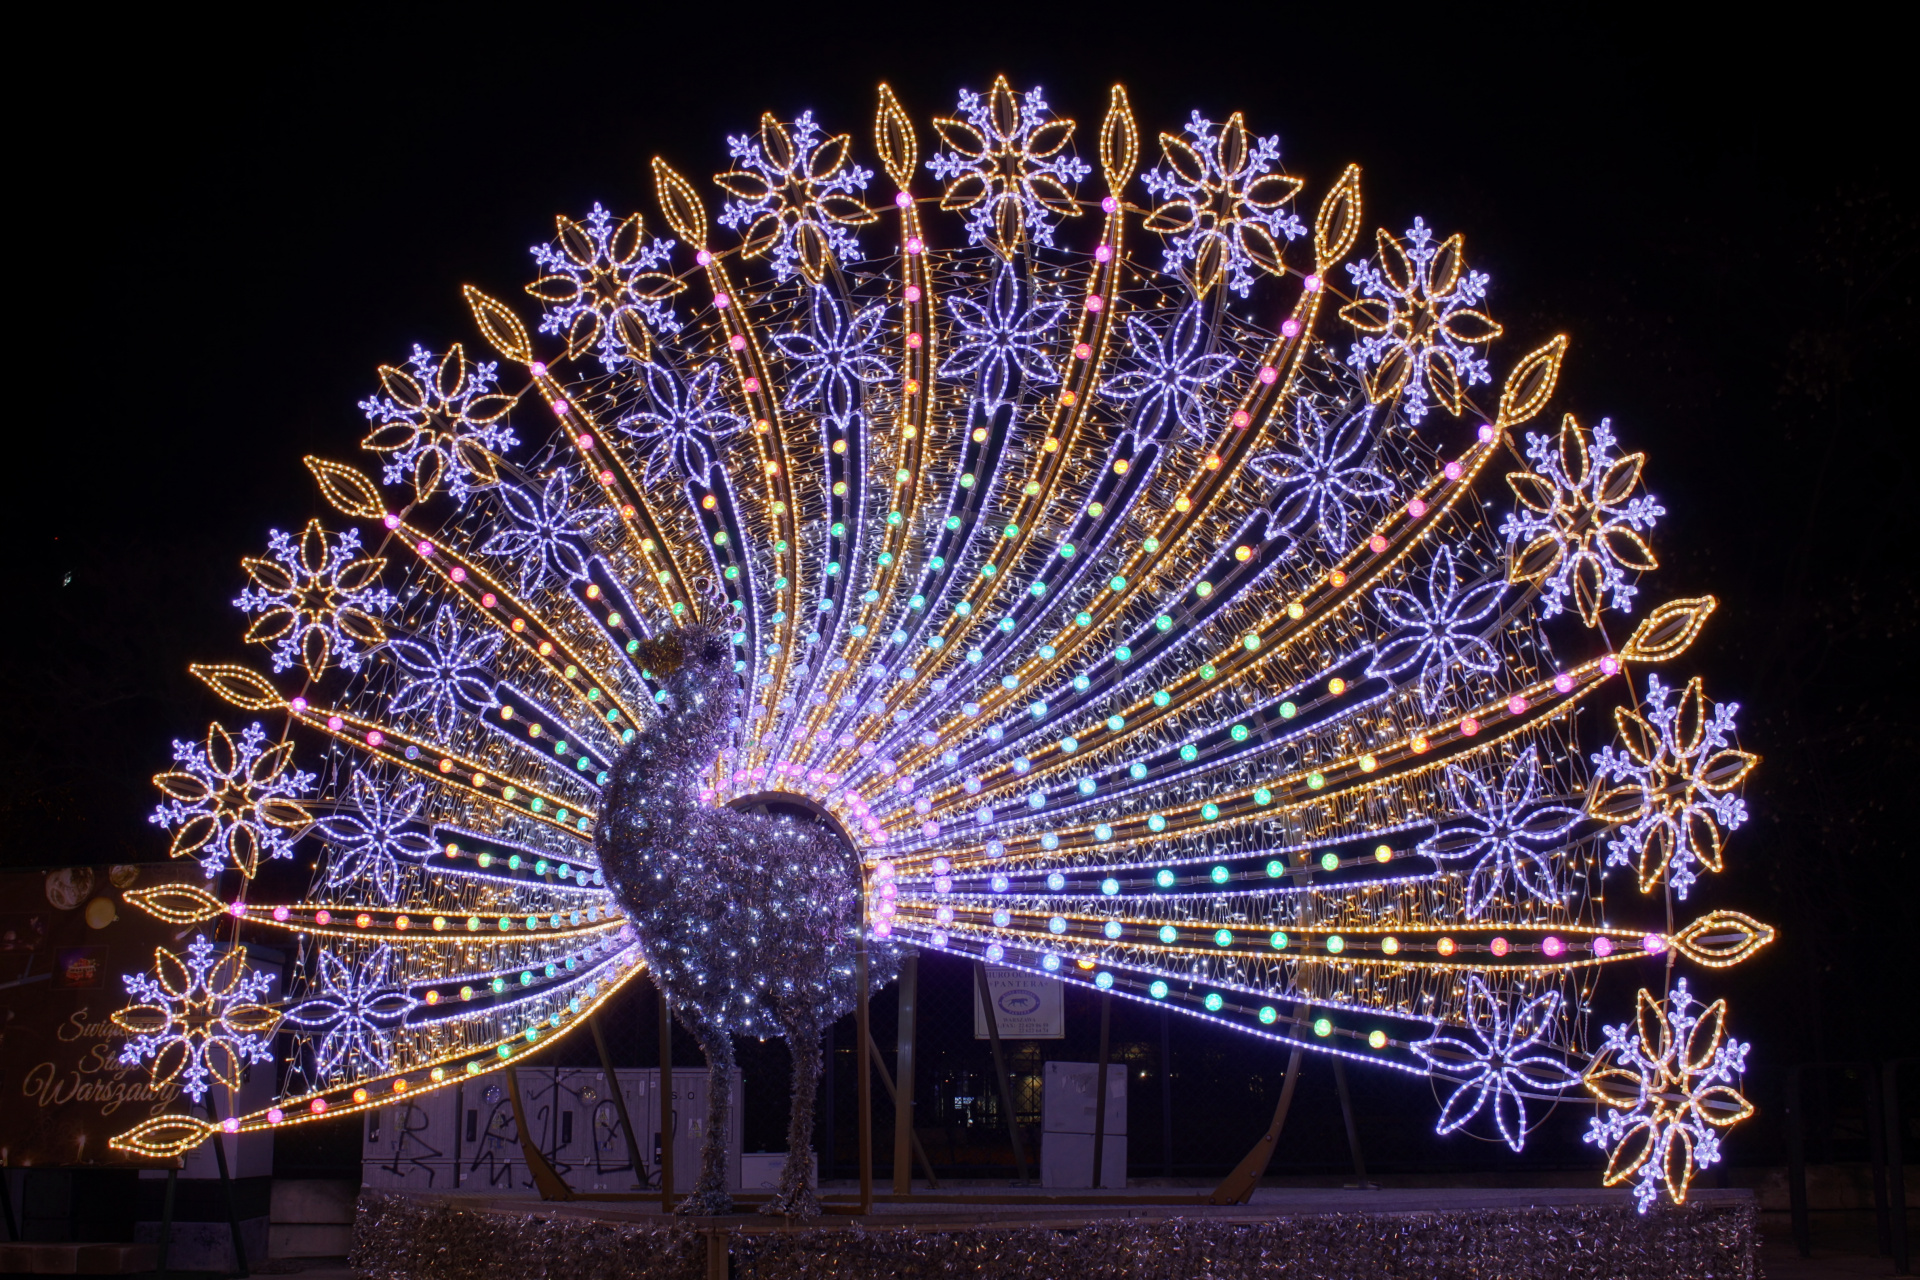 Peacock at Aleje Ujazdowskie (Warsaw » Christmas Illumination)